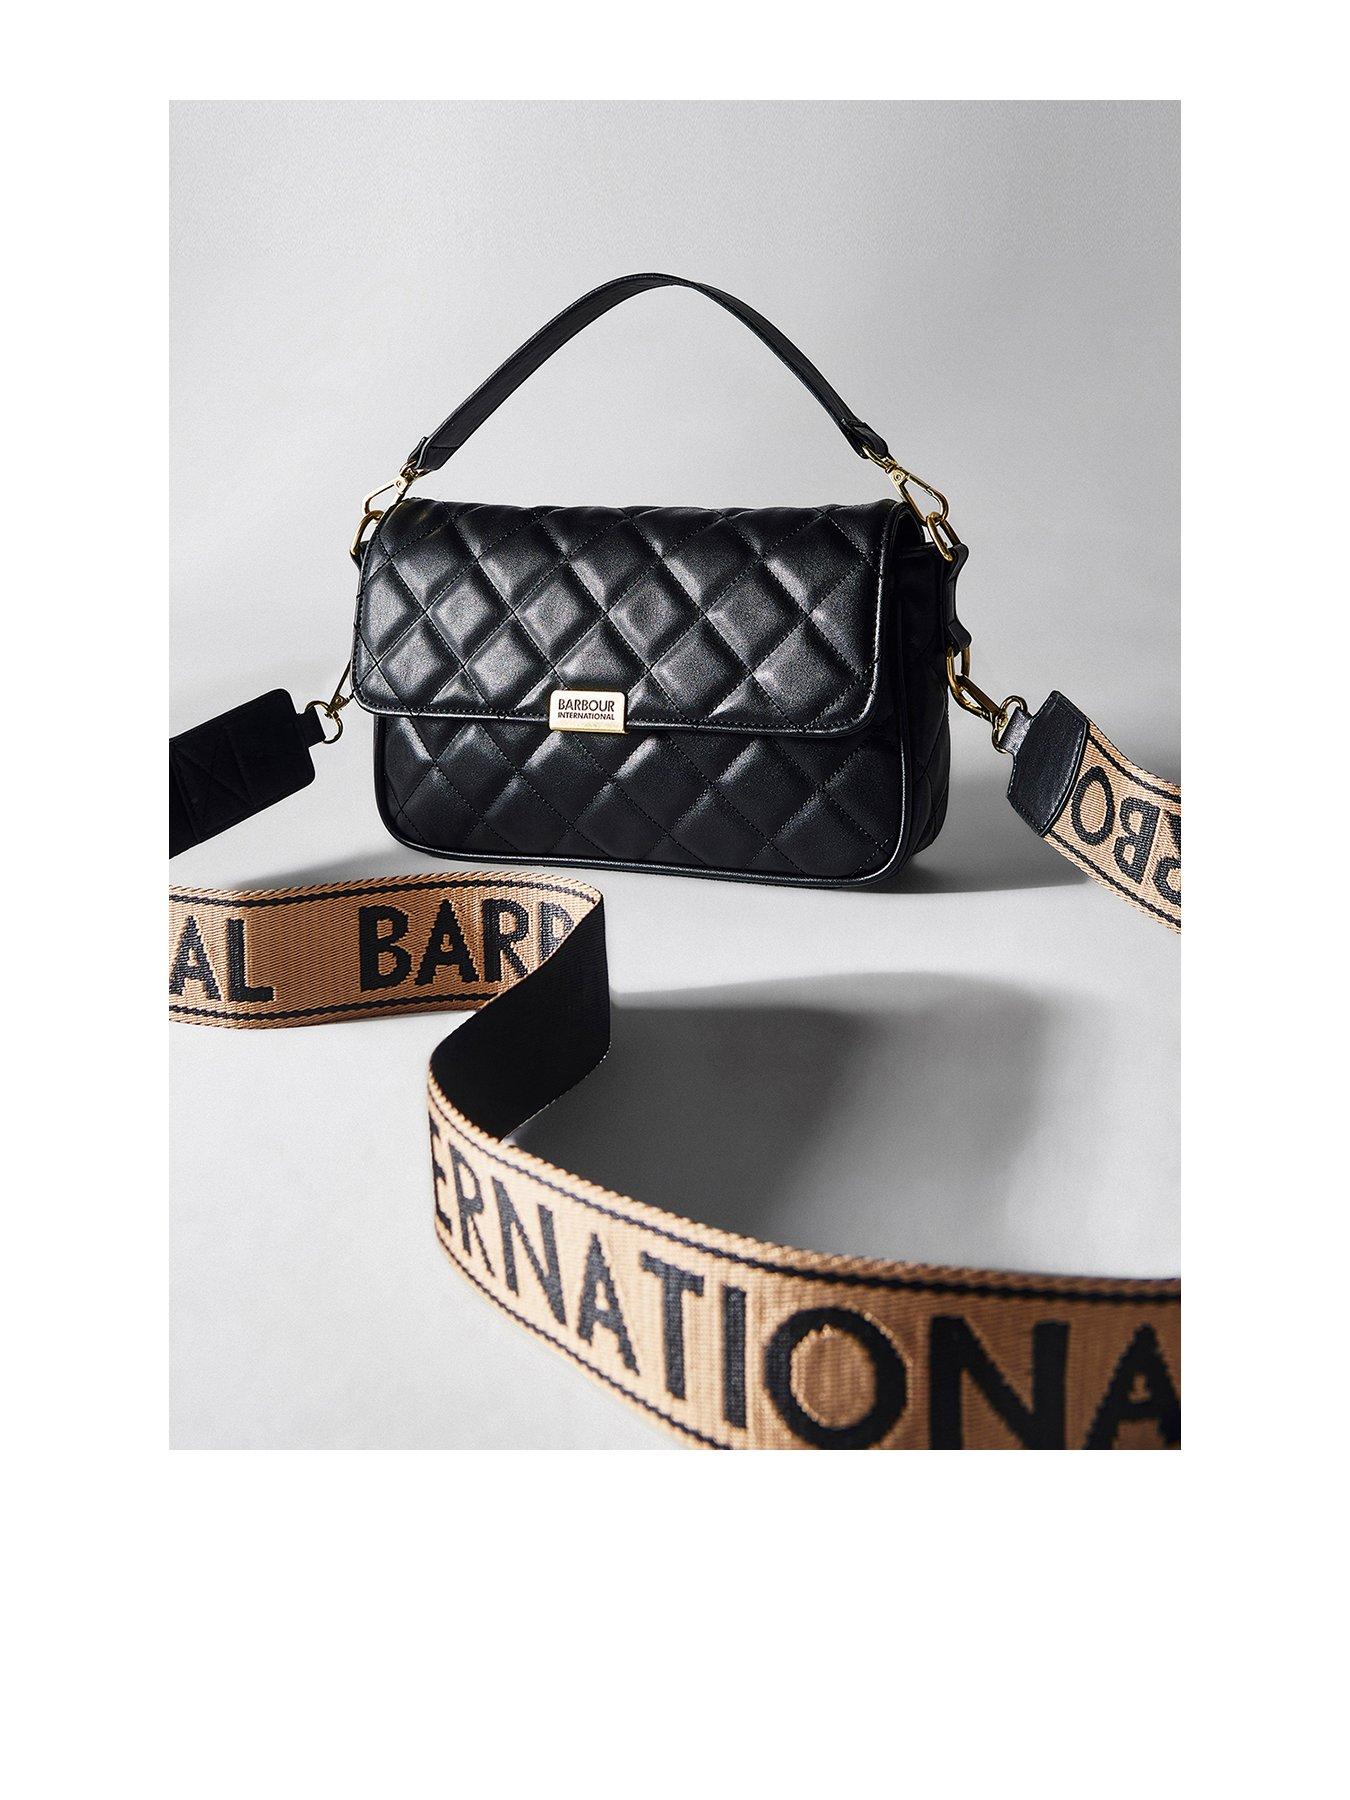 Small Crossbody Bags for Women - Leather Handbag - Satchel Shoulder Bag - Fashion Design - Gold Clasp - Multifunctional